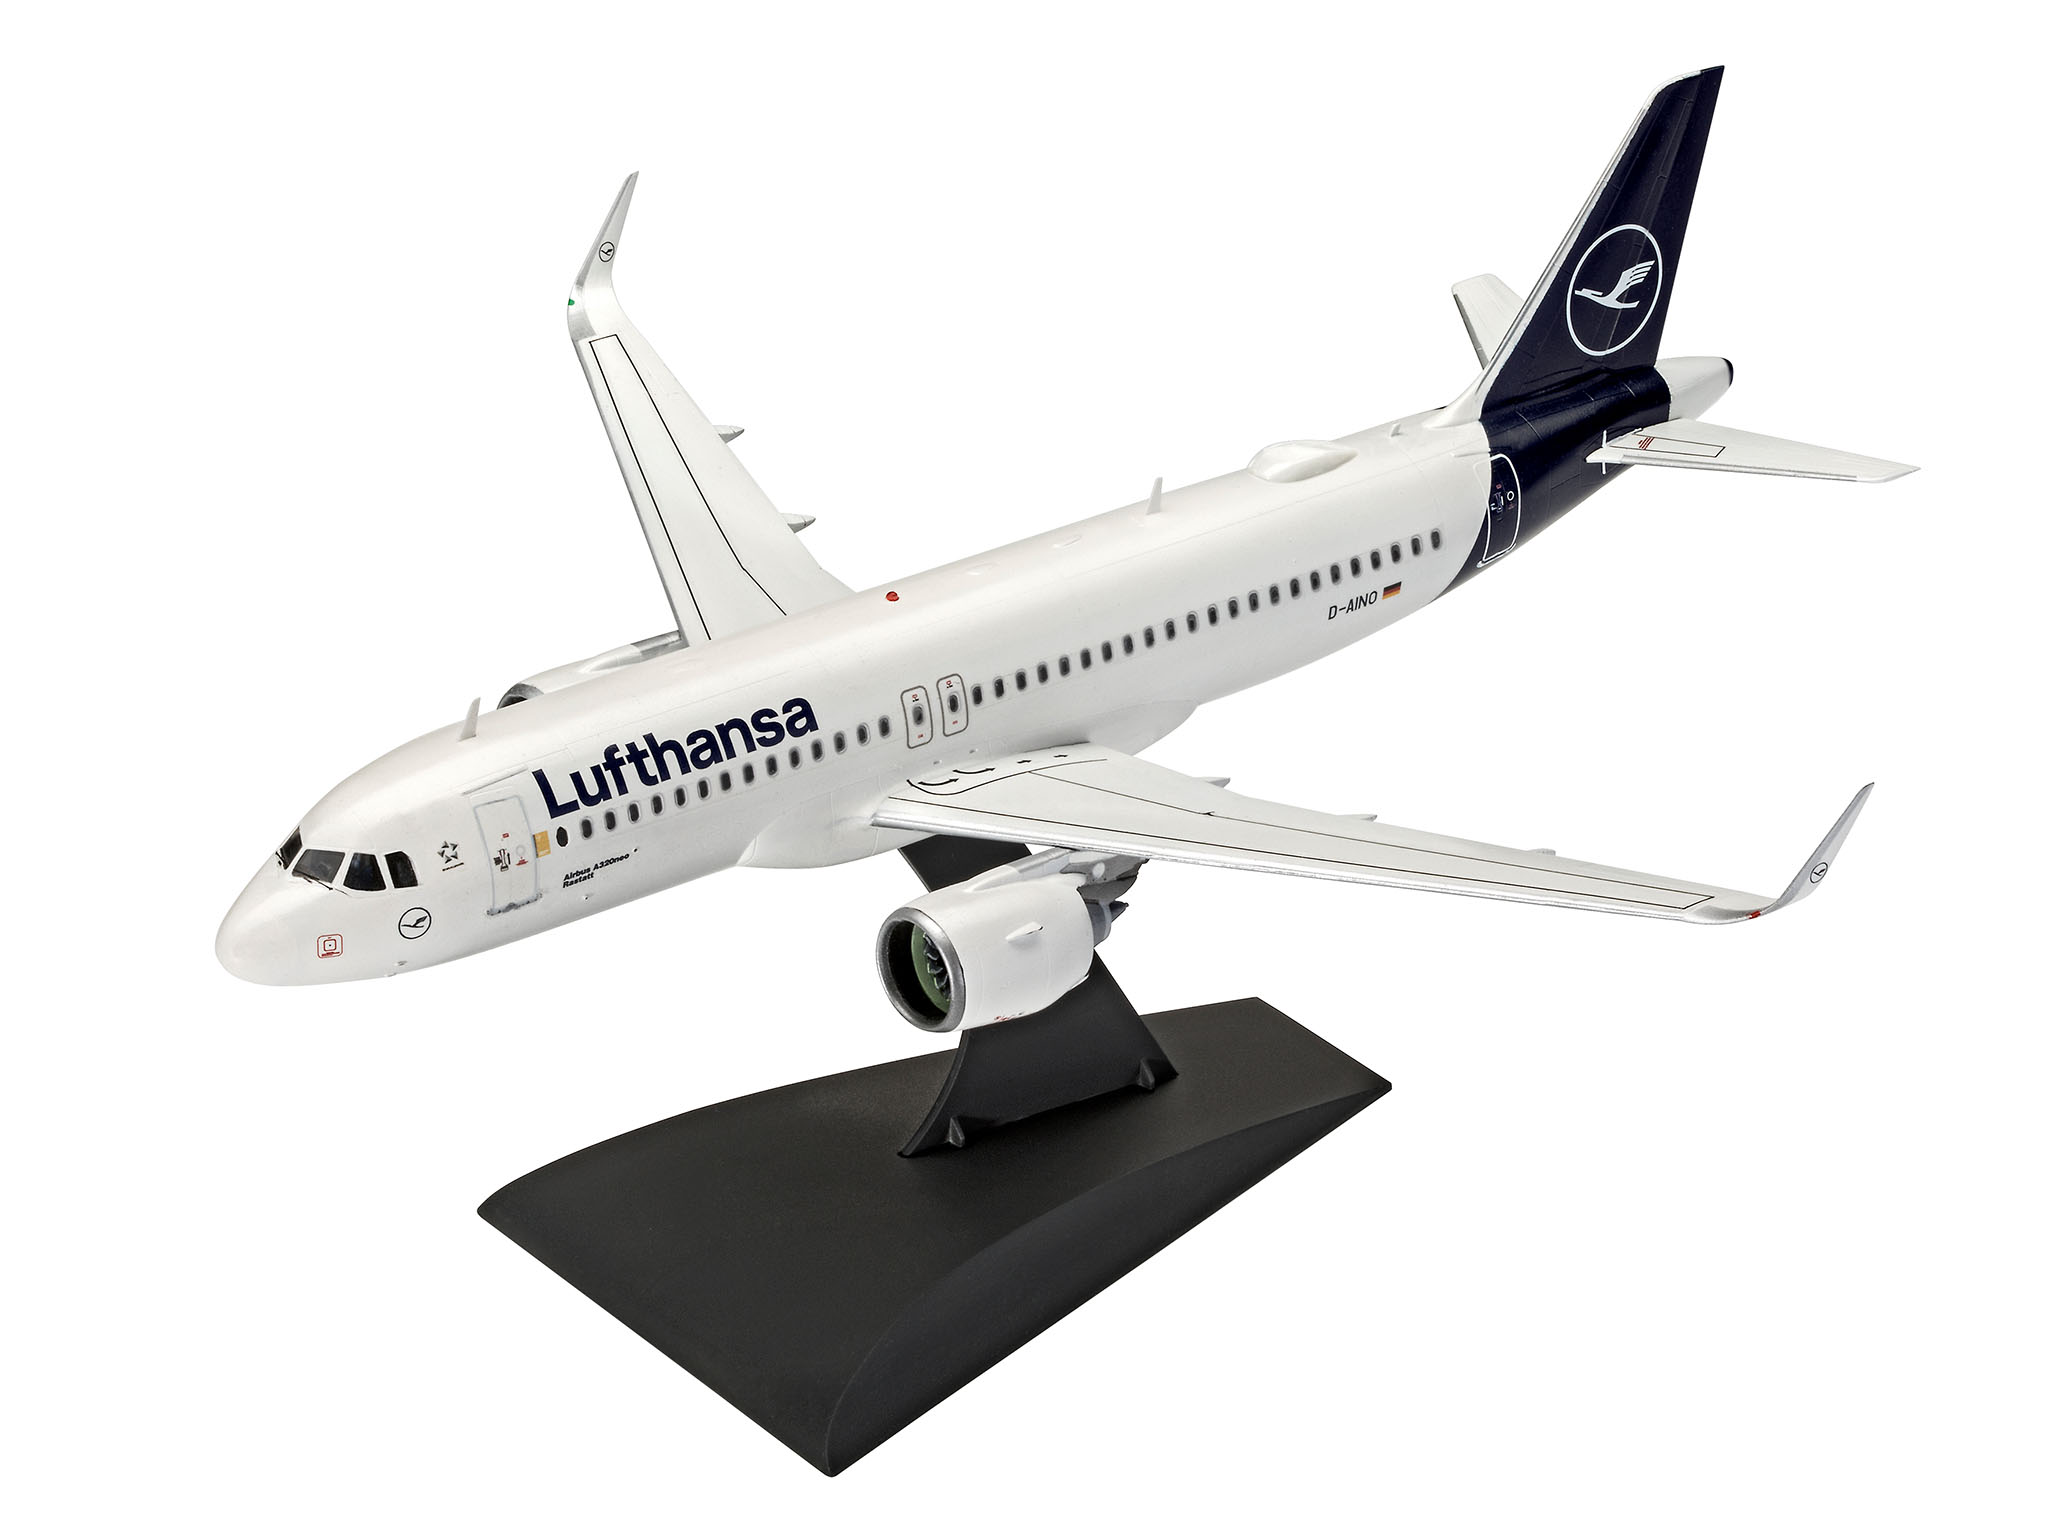     320 Lufthansa   ,  1:144, Revell 03942. # 2 hobbyplus.ru